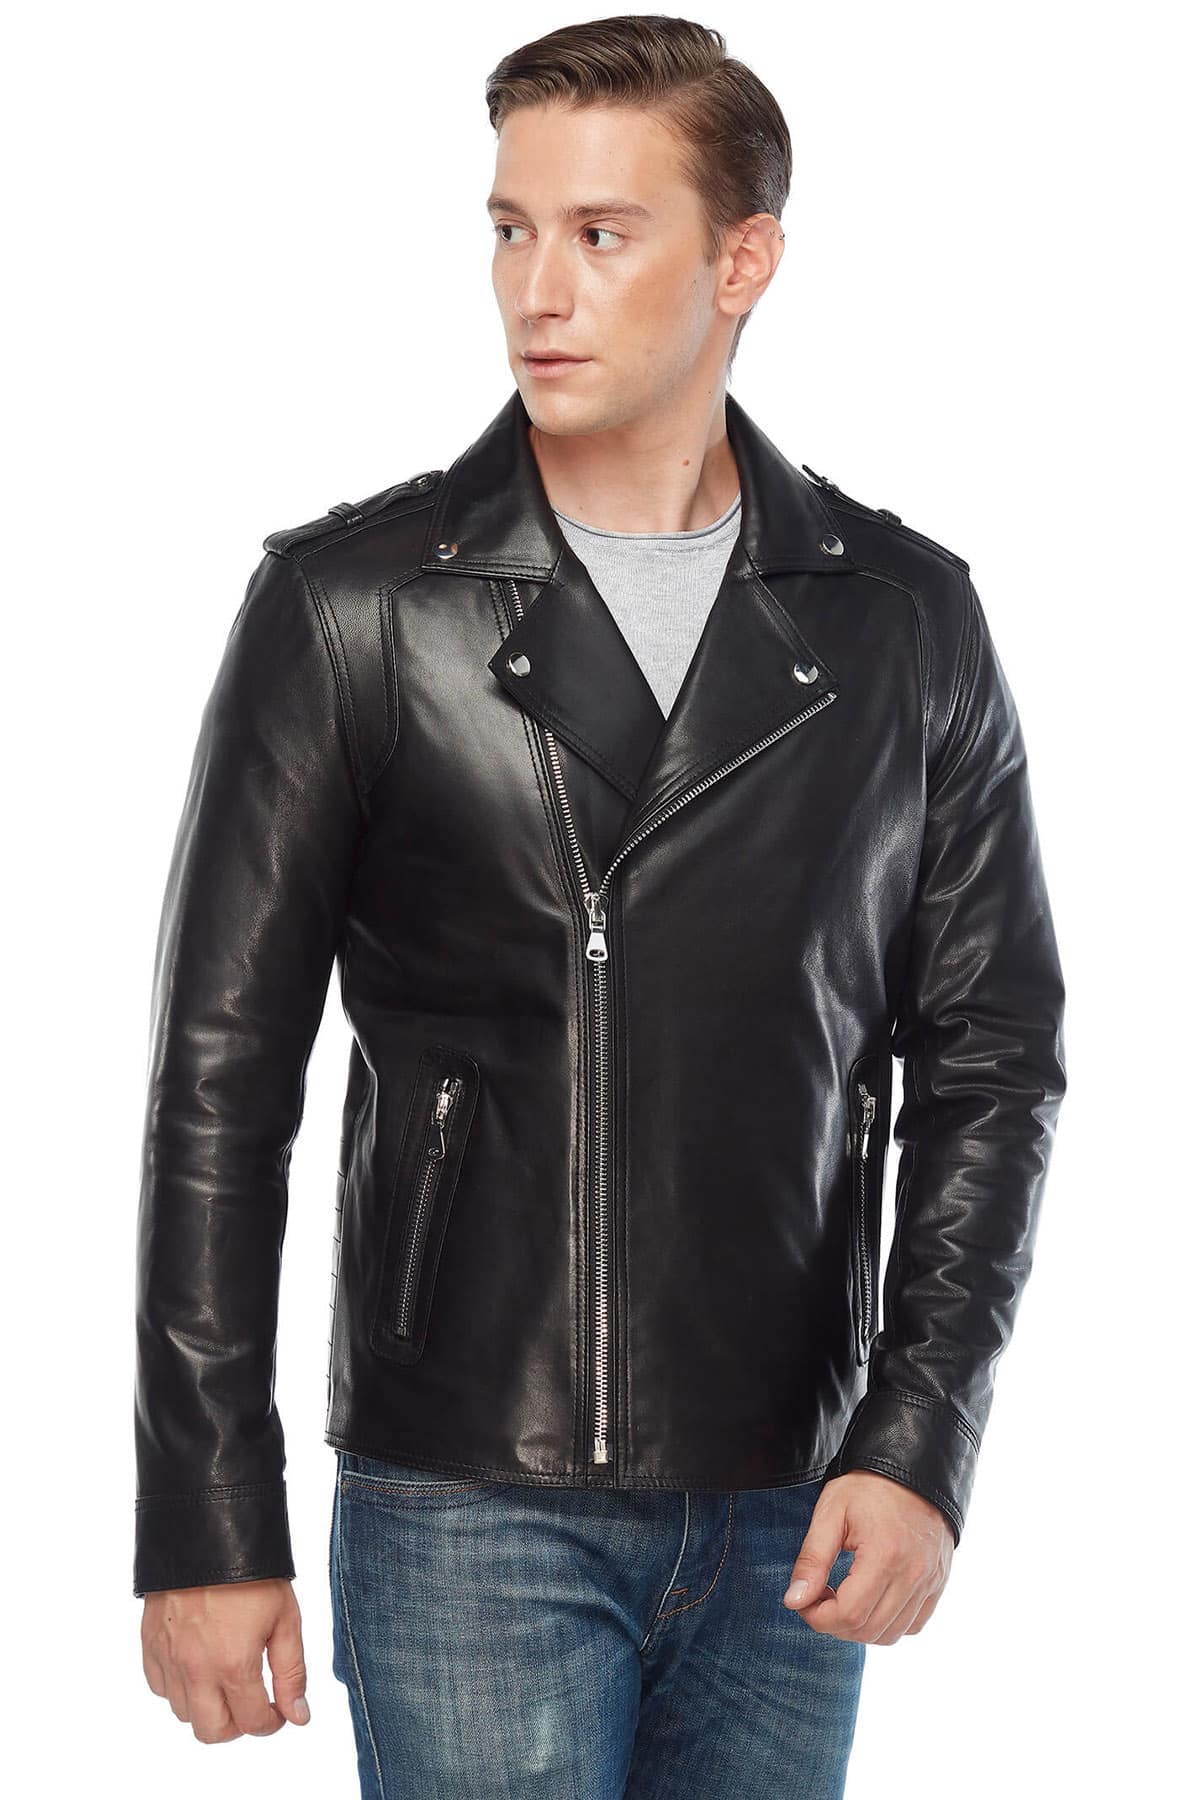 Hugh Dancy Biker Genuine Leather Jacket Black Pose